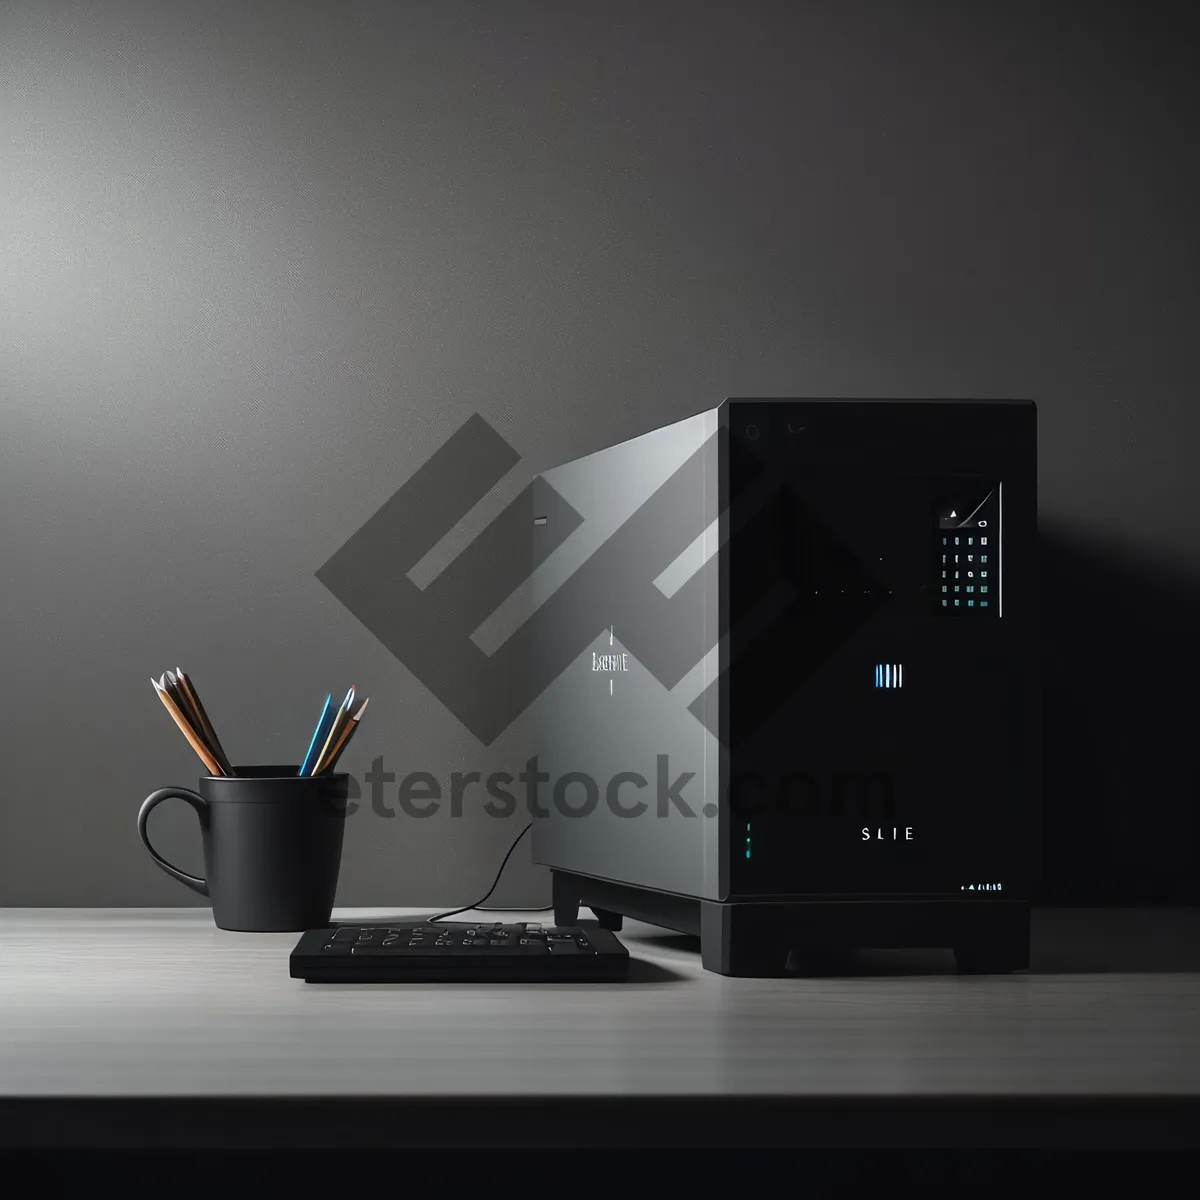 Picture of Modern Desktop Computer with Digital Display